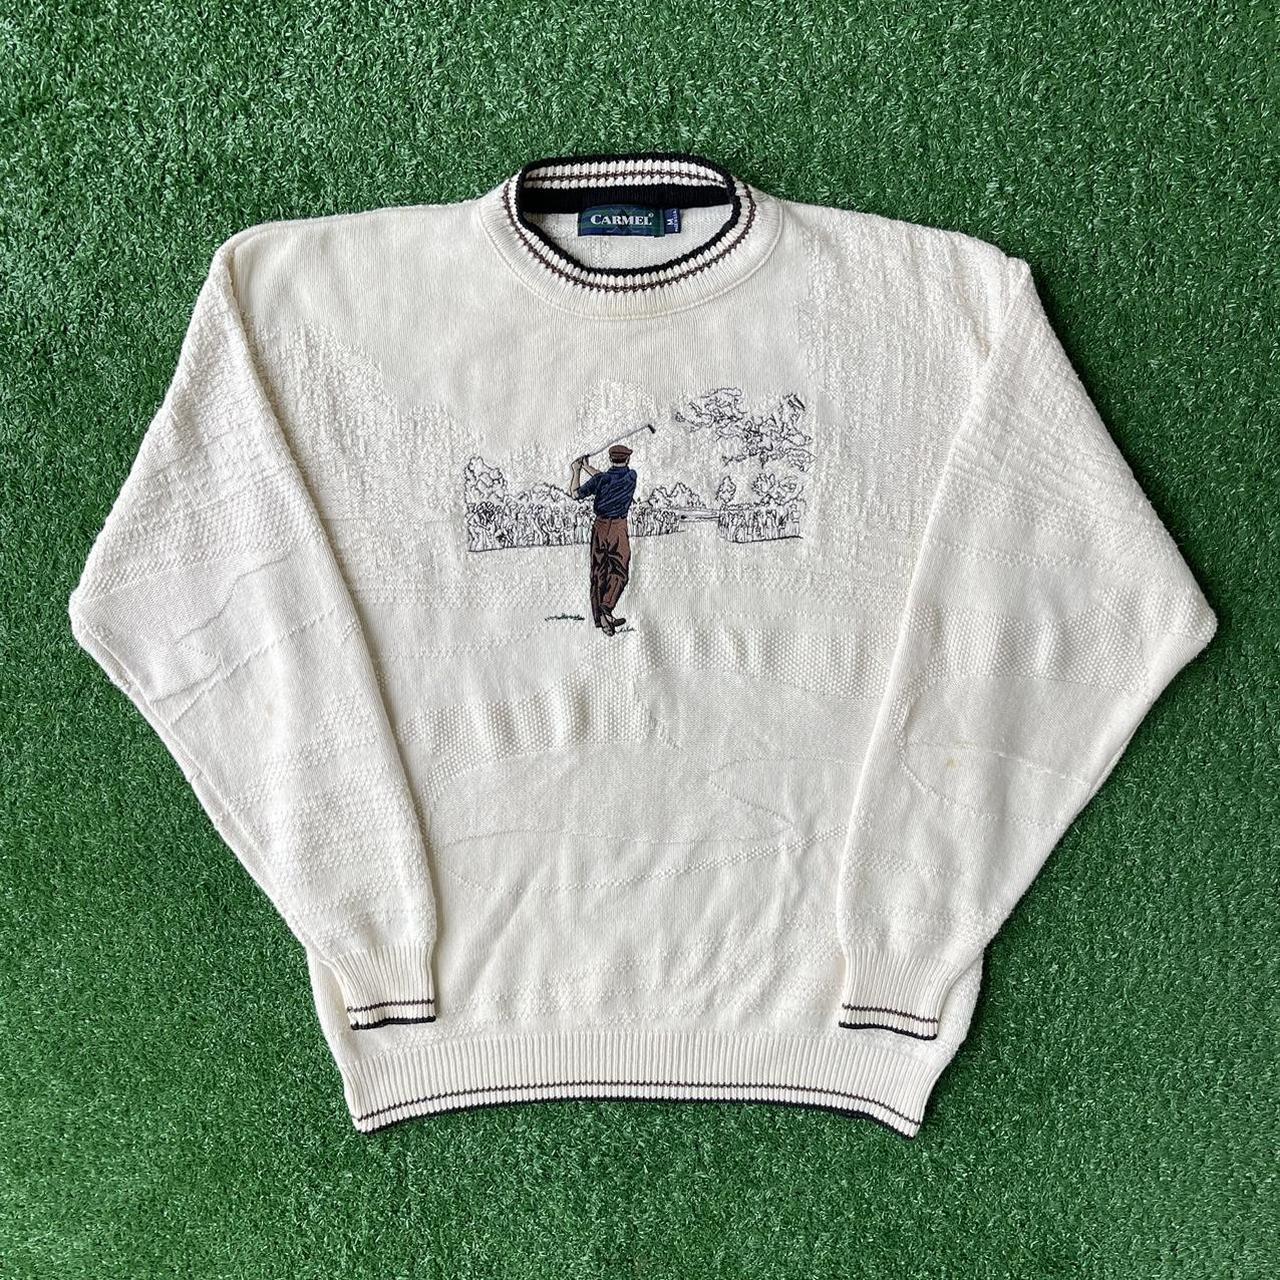 Vintage 90s 3D Golf Sweater 90s Knit 3D gold... - Depop